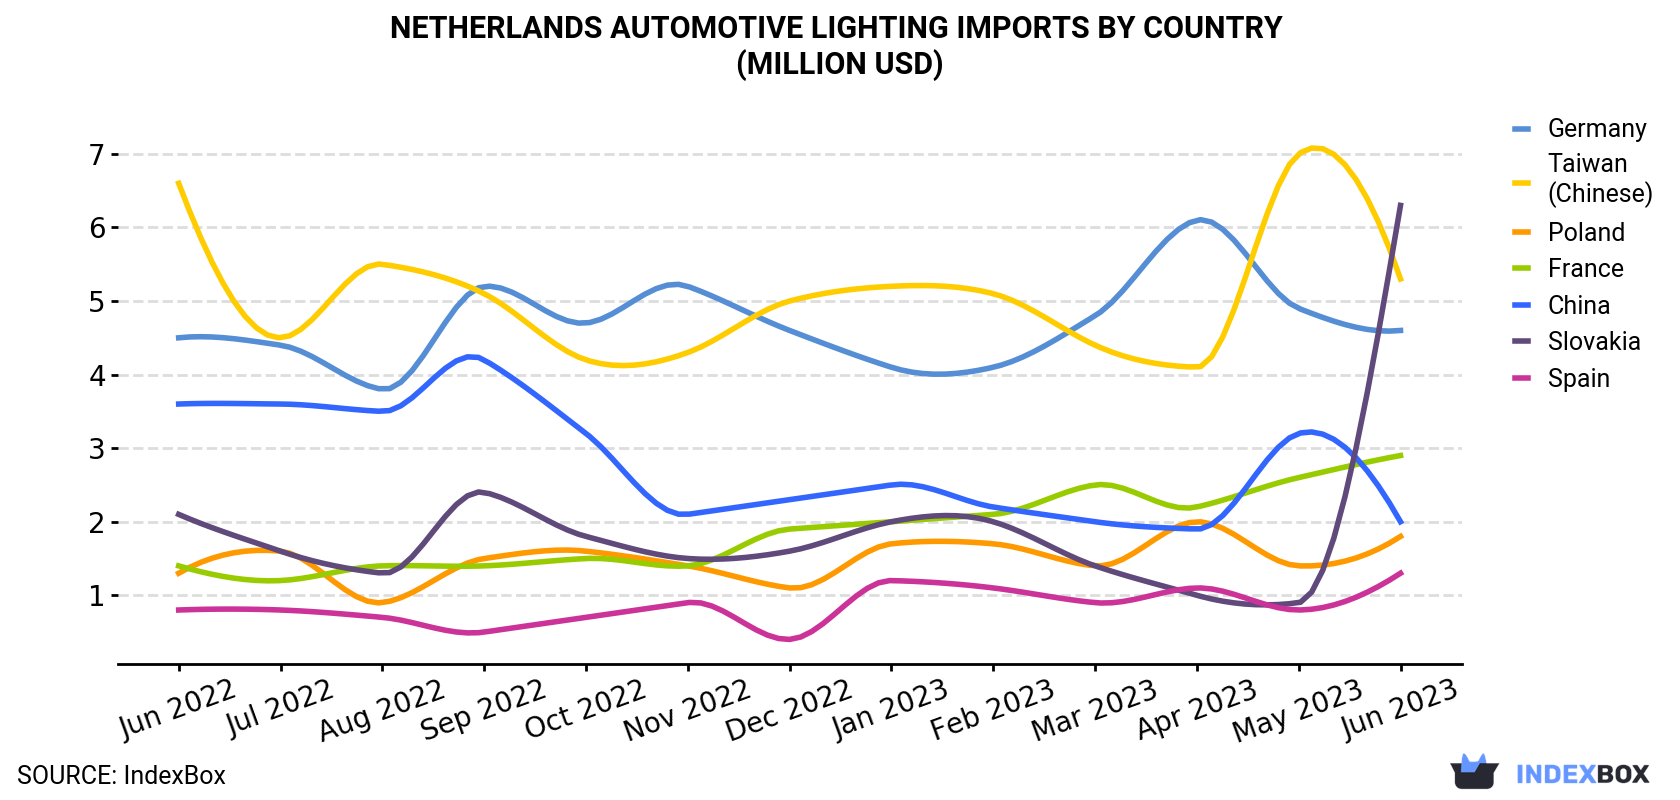 Netherlands Automotive Lighting Imports By Country (Million USD)